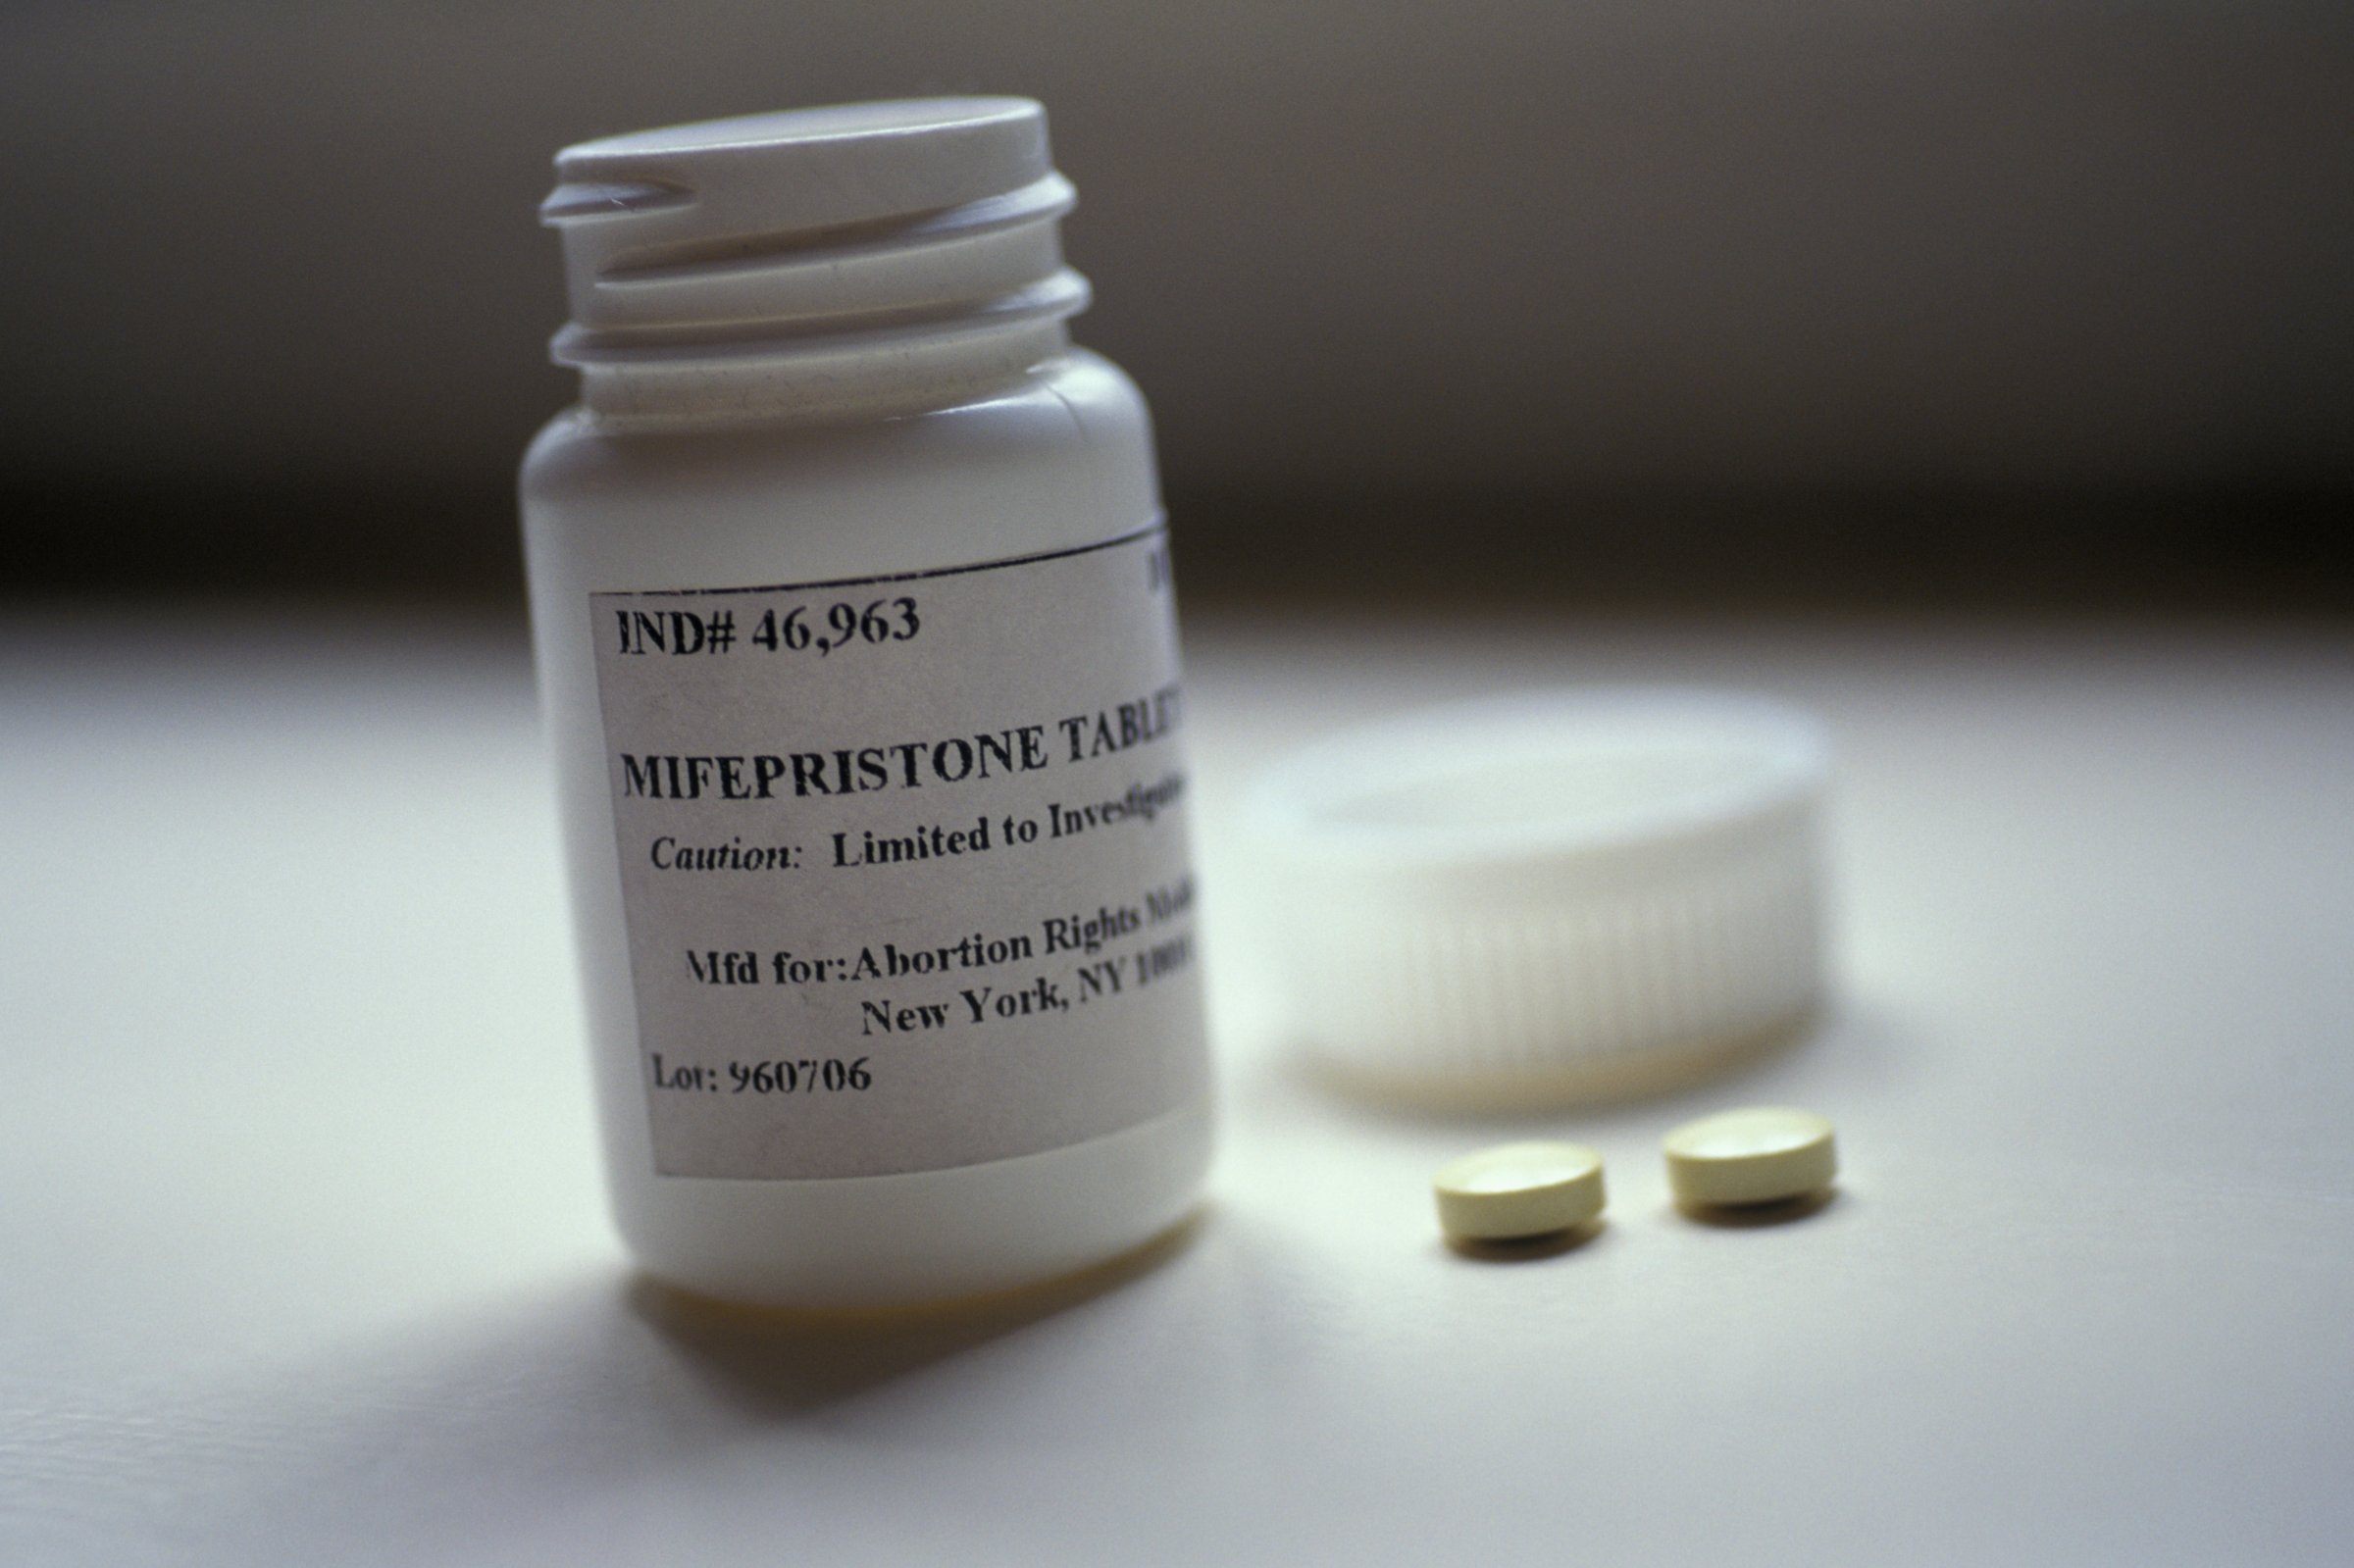 Mifepristone, the abortion pill known as RU 486